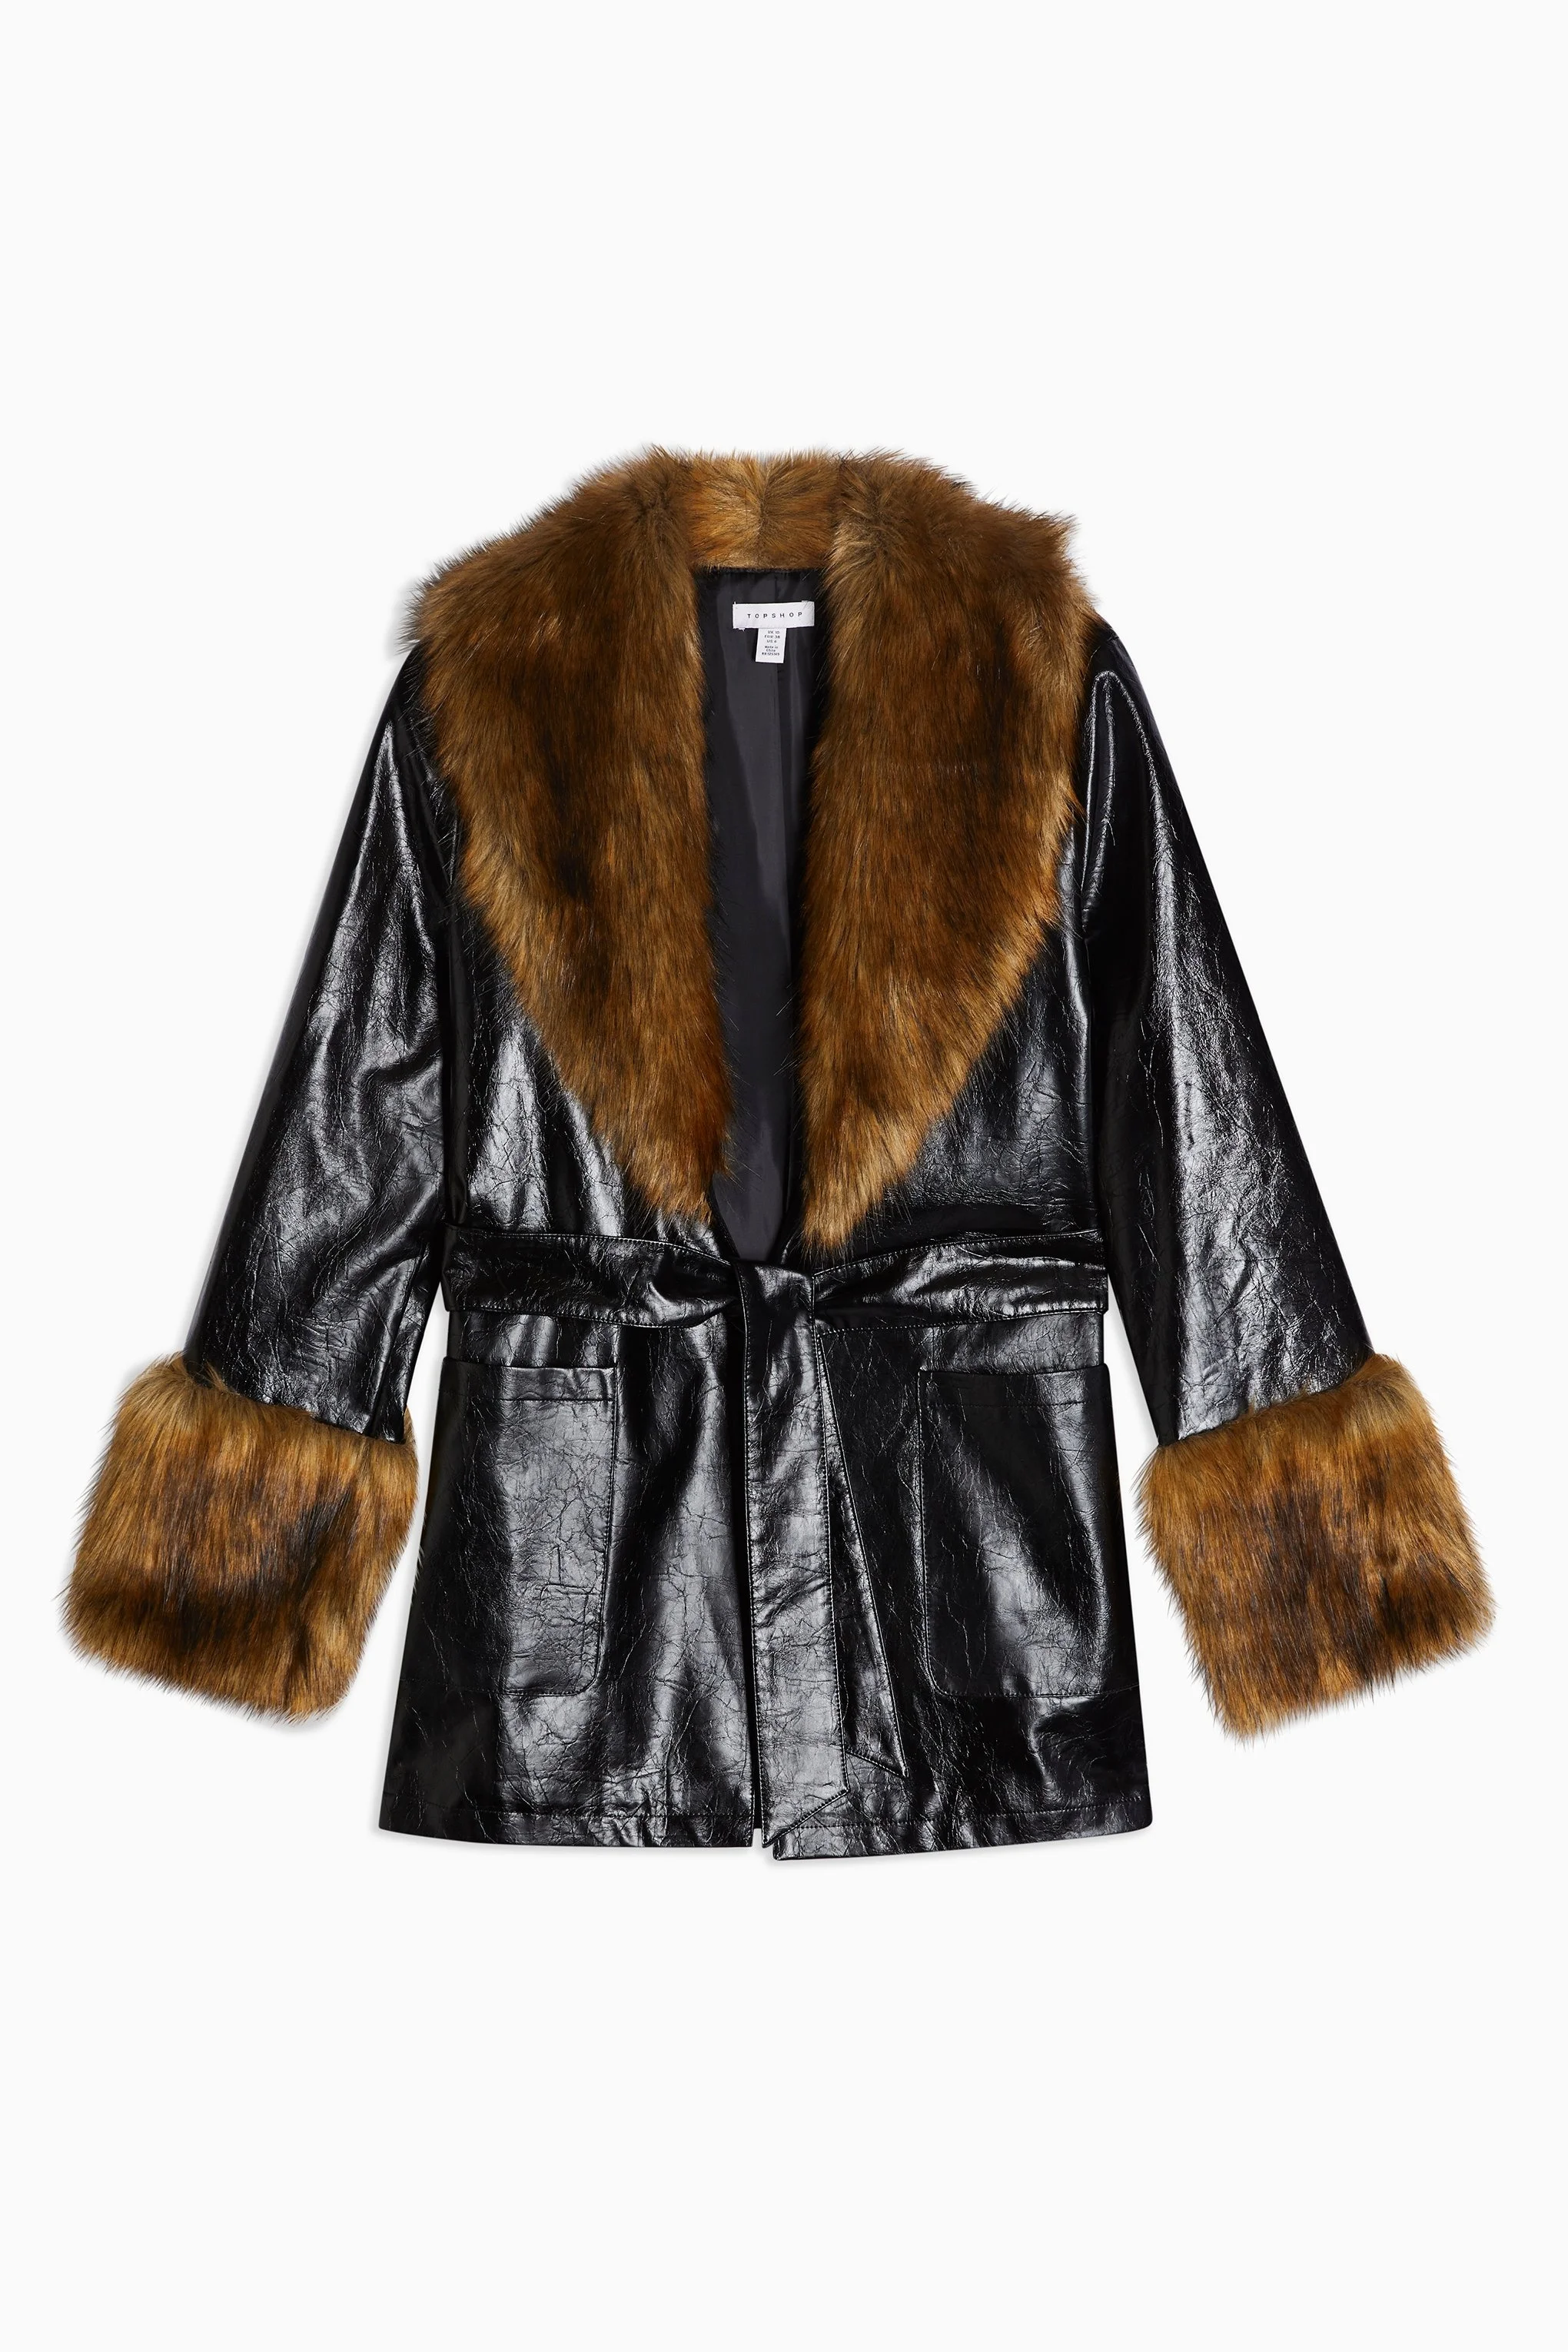 Topshop coat with faux fur trim in black